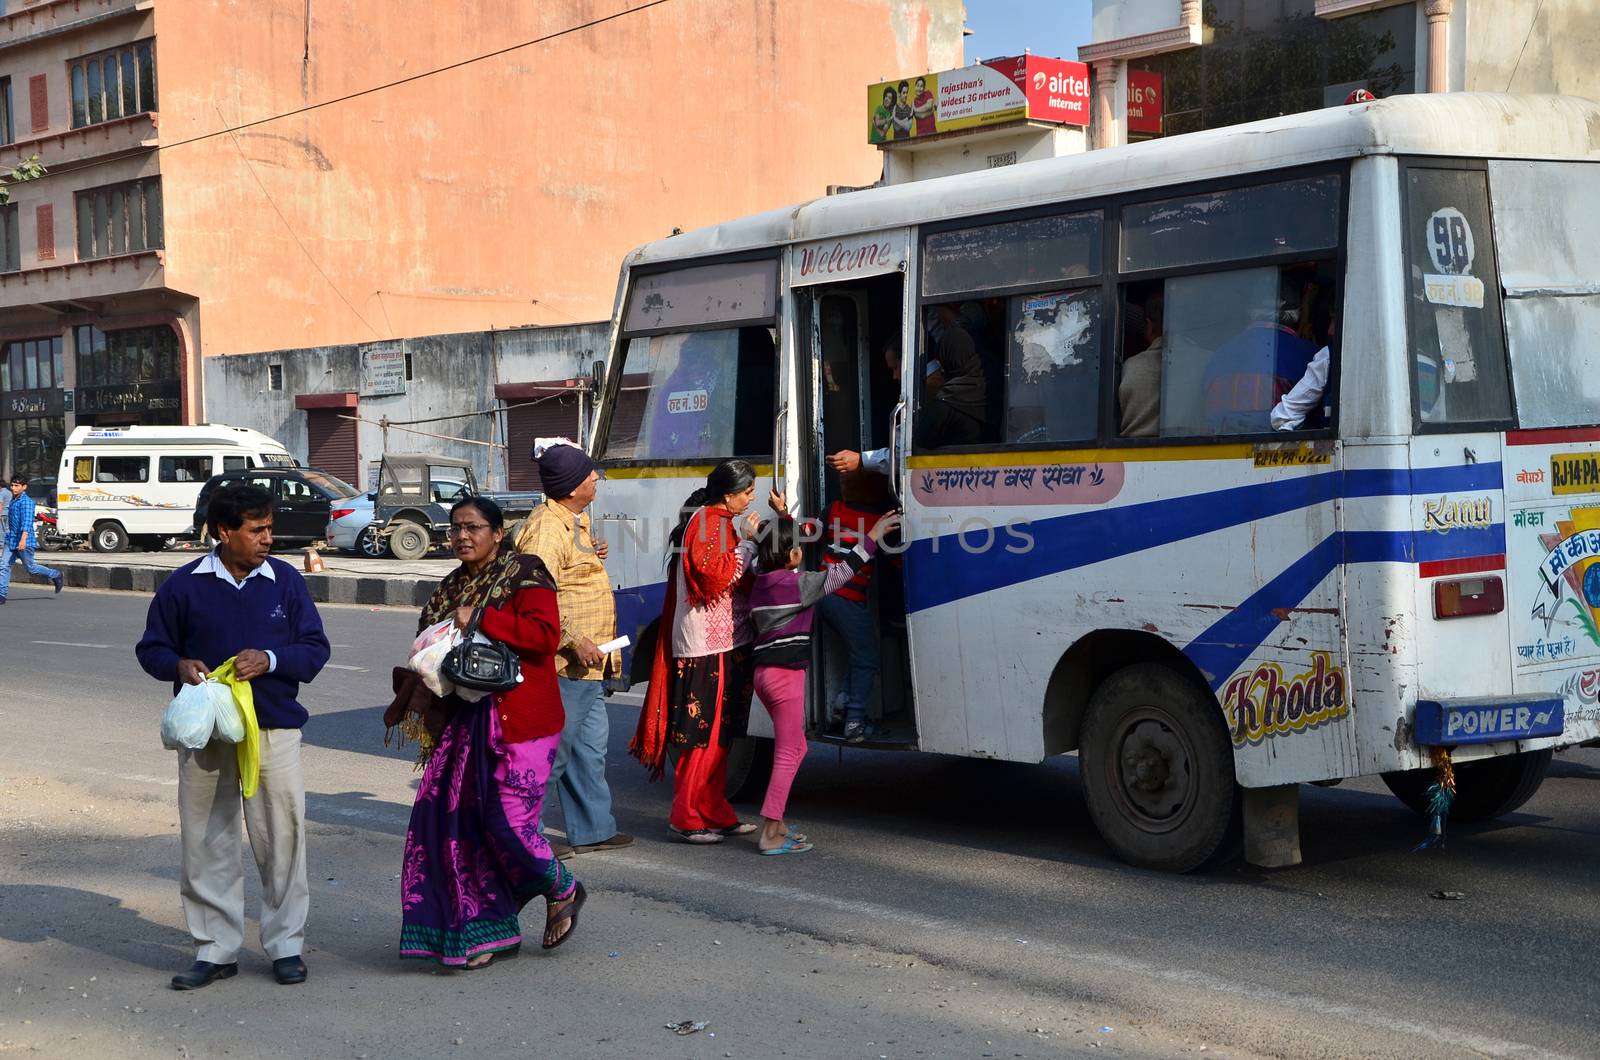 Jaipur, India - December 30, 2014: Indian people taking a bus in Jaipur by siraanamwong